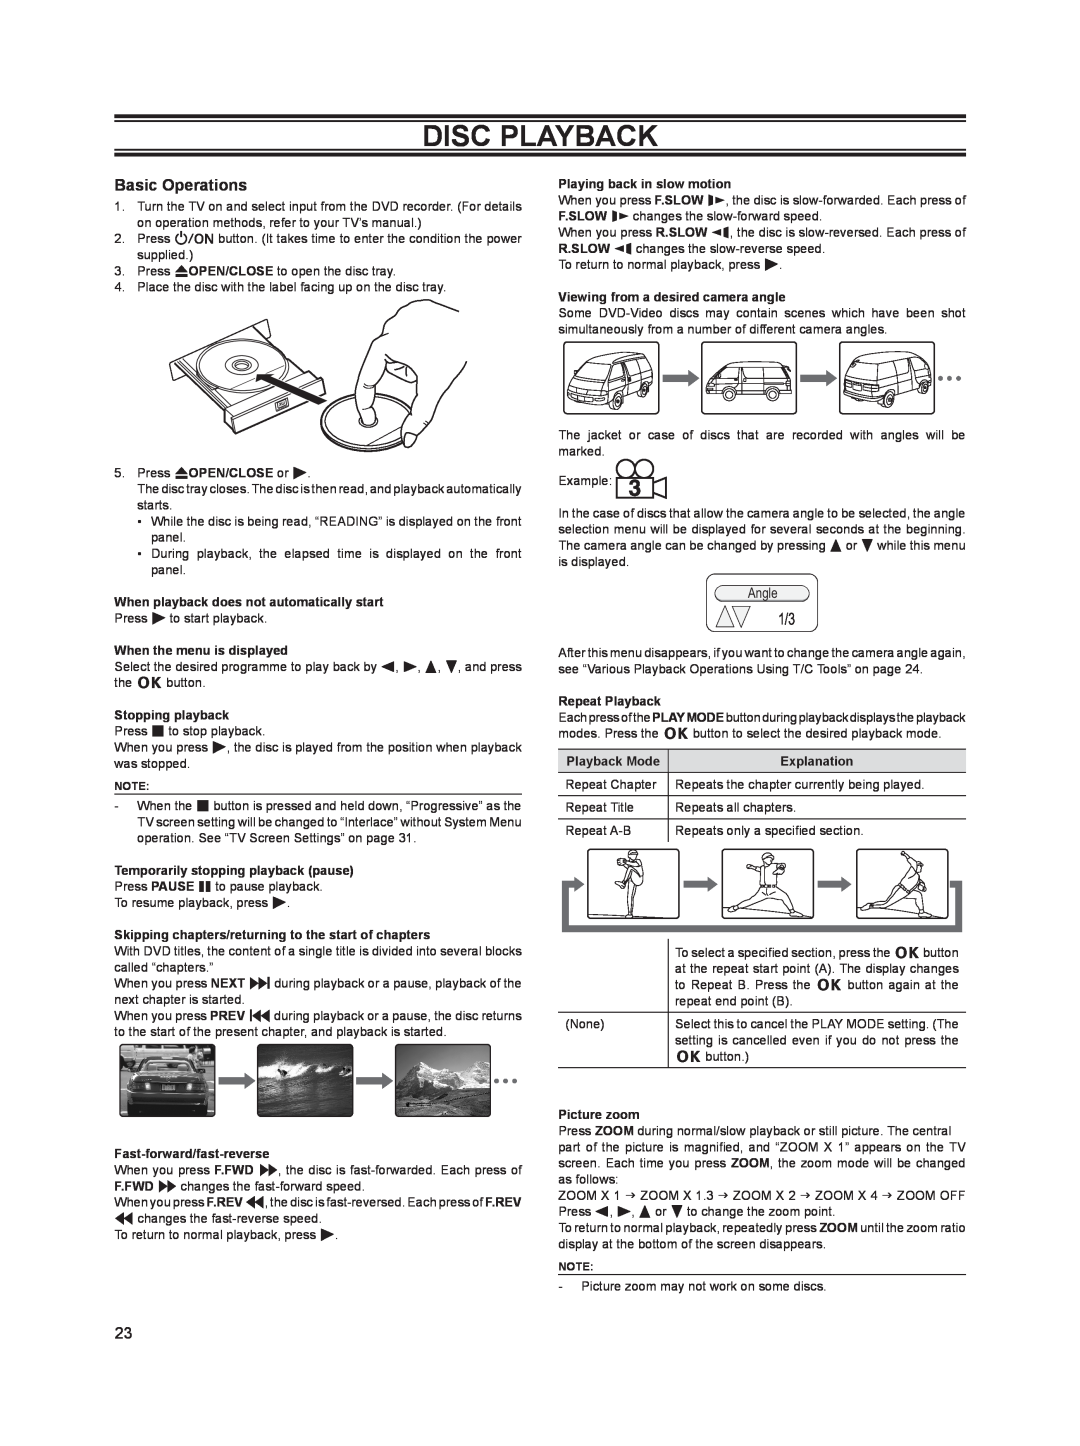 Sanyo DVR-HT120 instruction manual Disc Playback, Basic Operations 